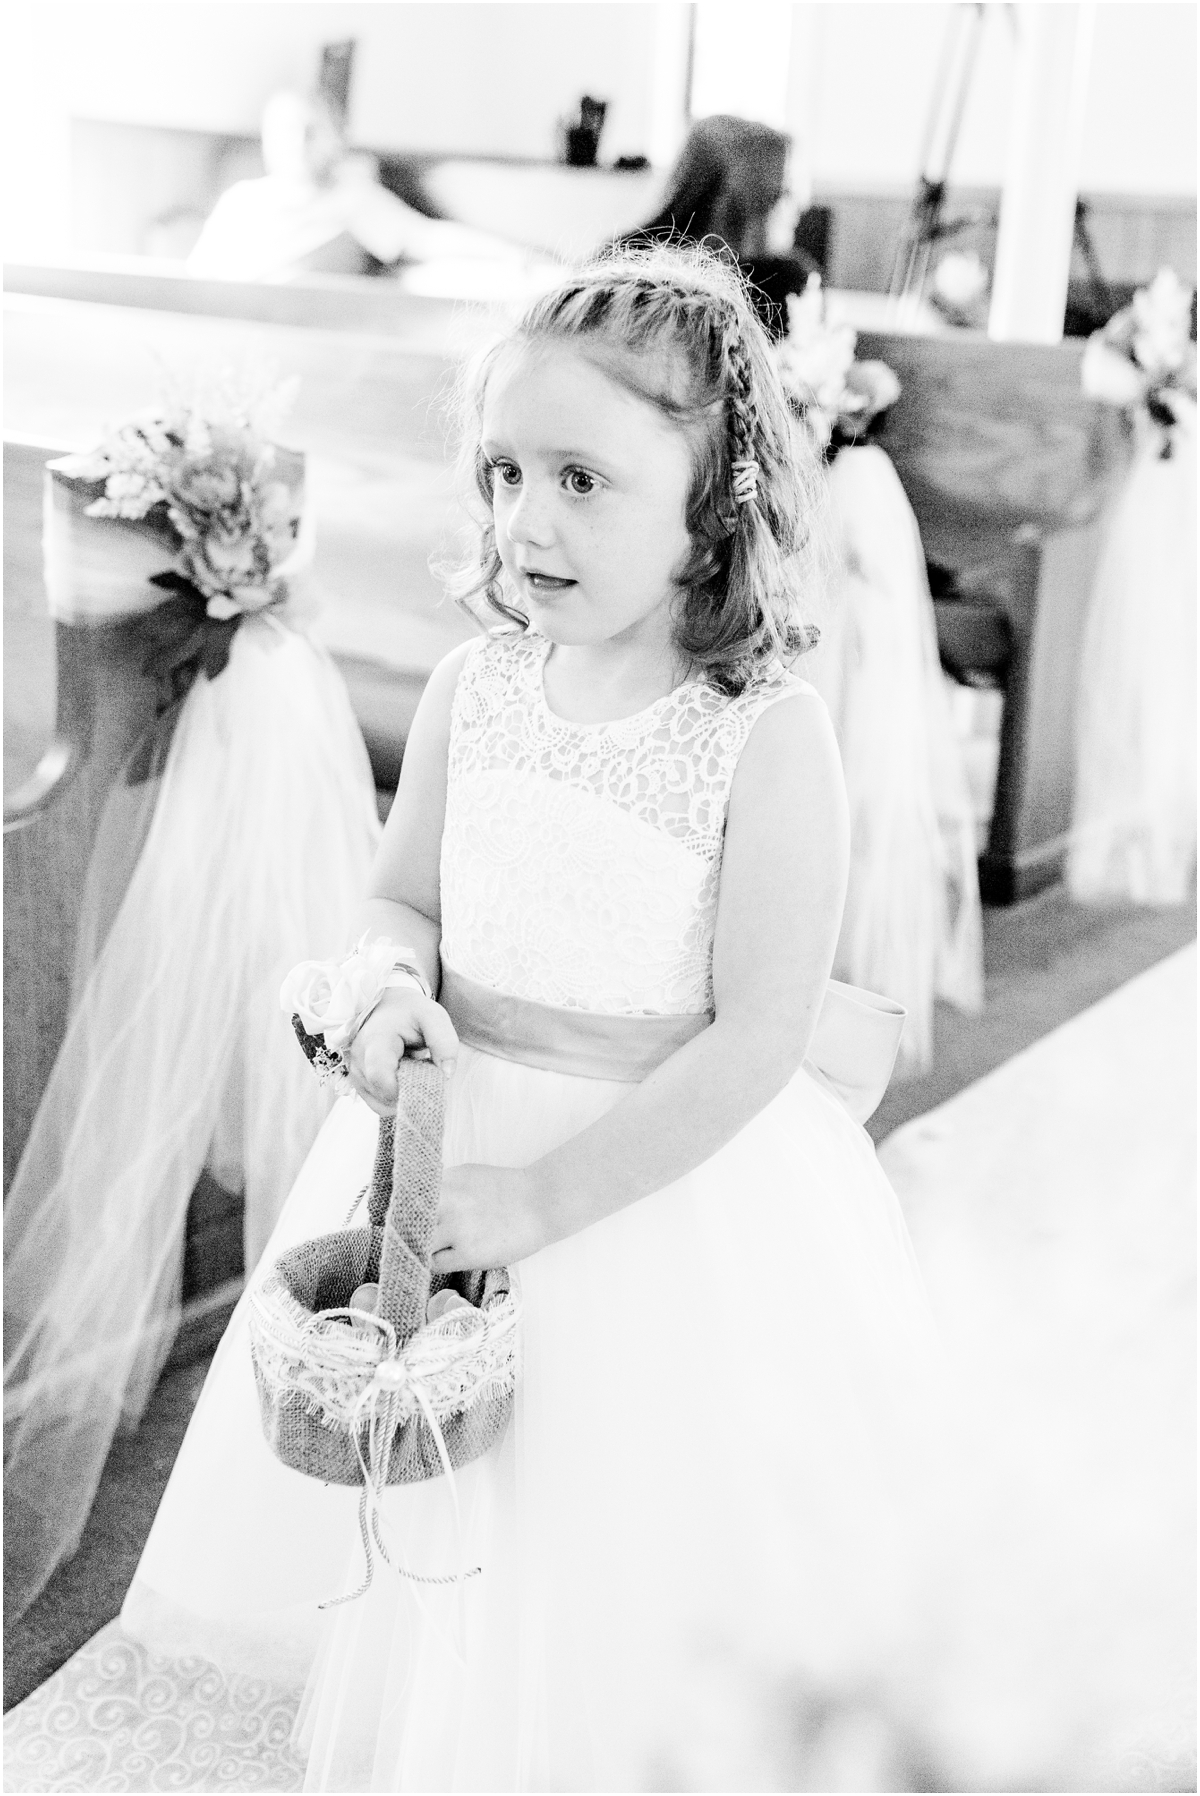 Summer wedding in Spartanburg at Roebuck Presbyterian Church | Spartanburg Wedding Photographer | Jacqueline & Laura